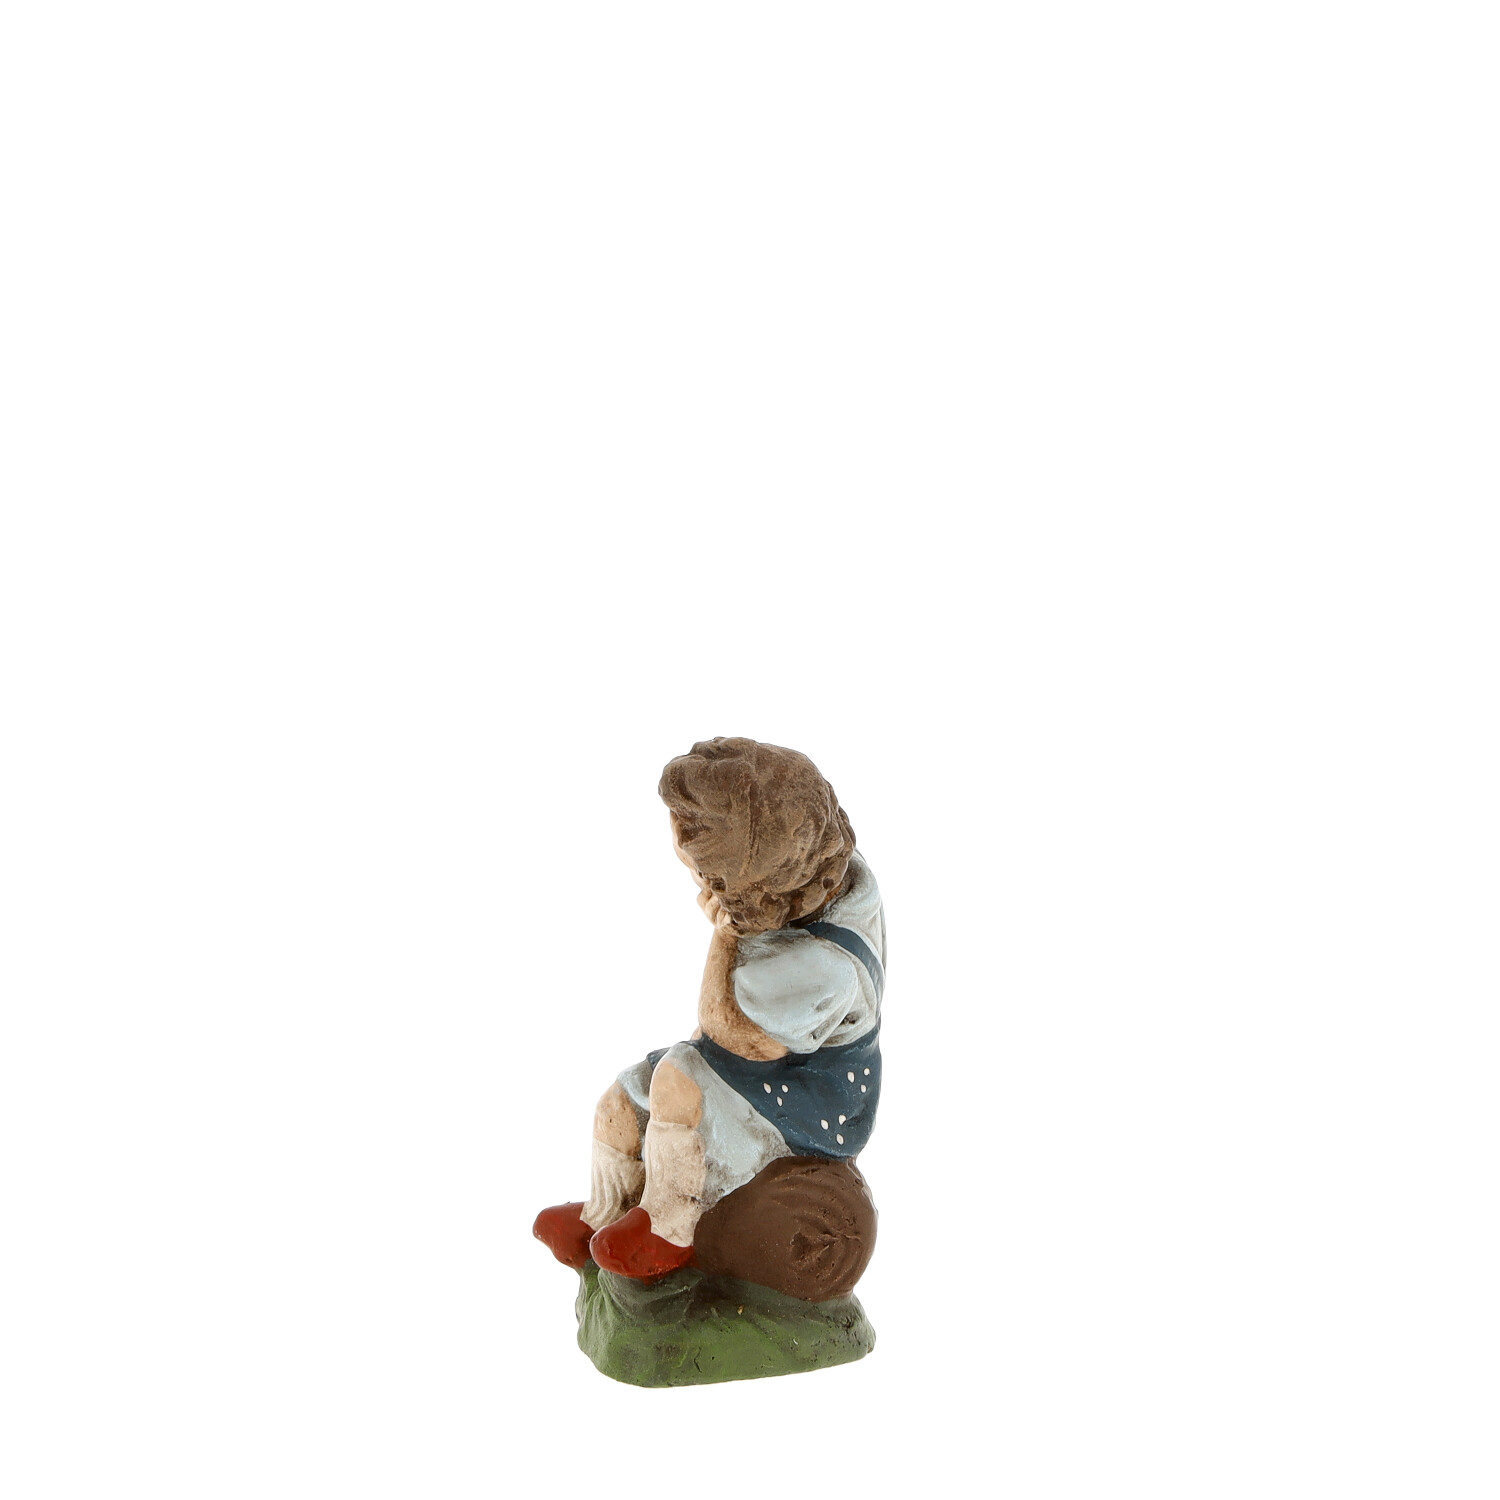 Sitting girl - Marolin Nativity figure - made in Germany